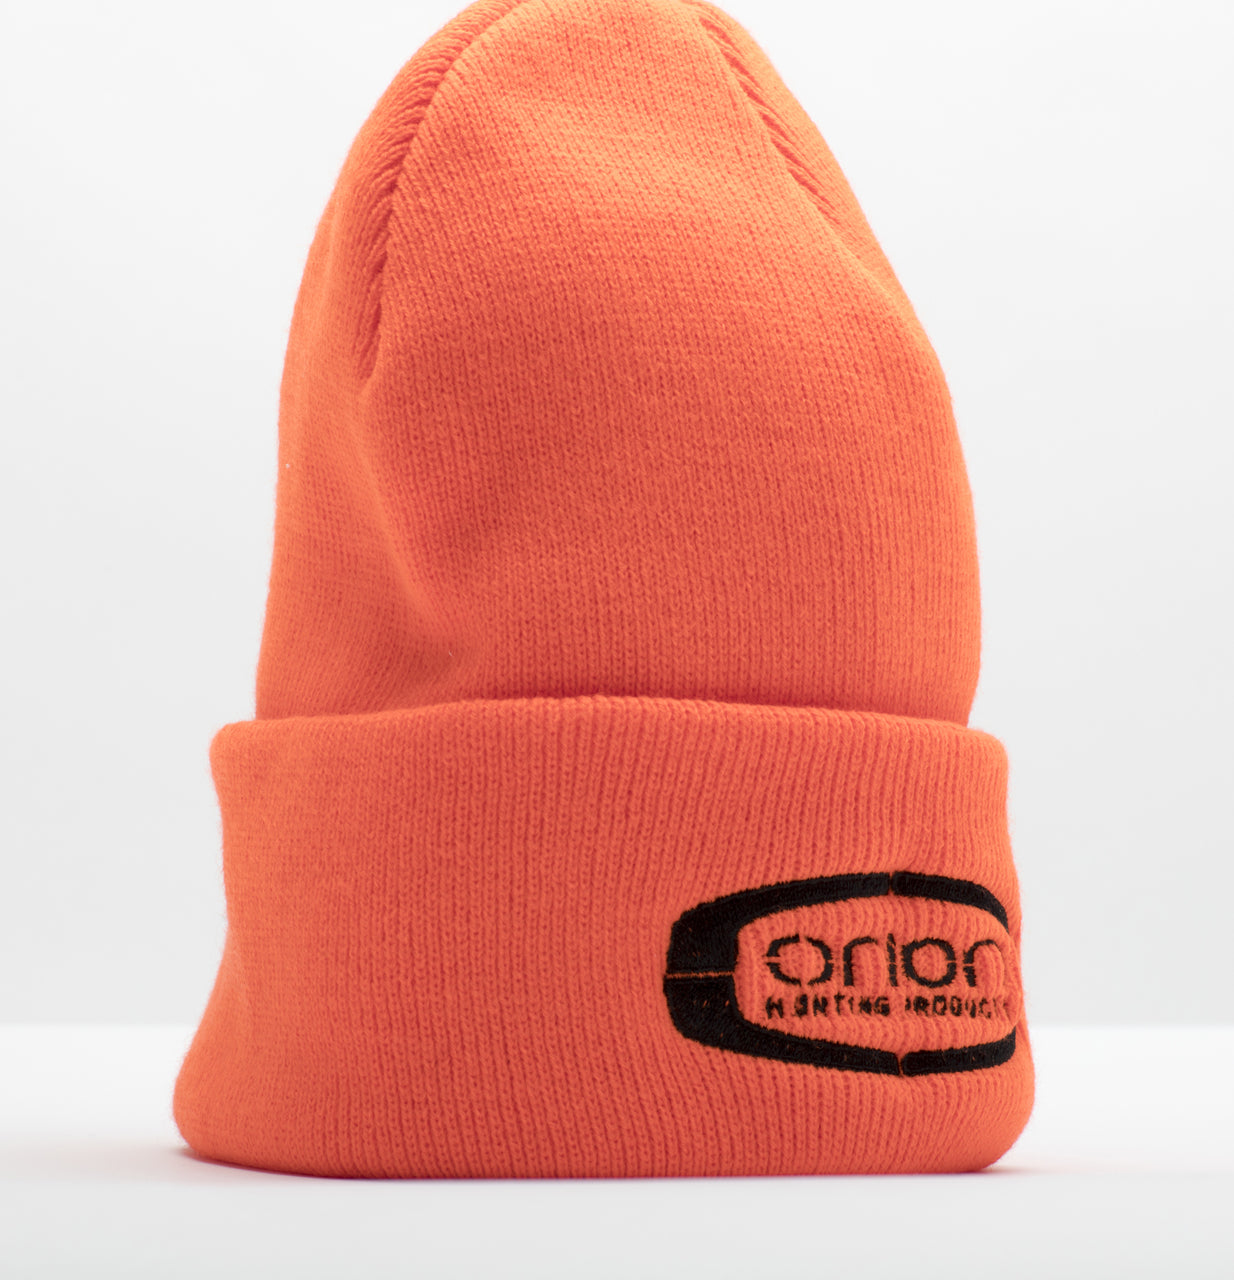 Orion Blaze Orange Hat with Black Logo